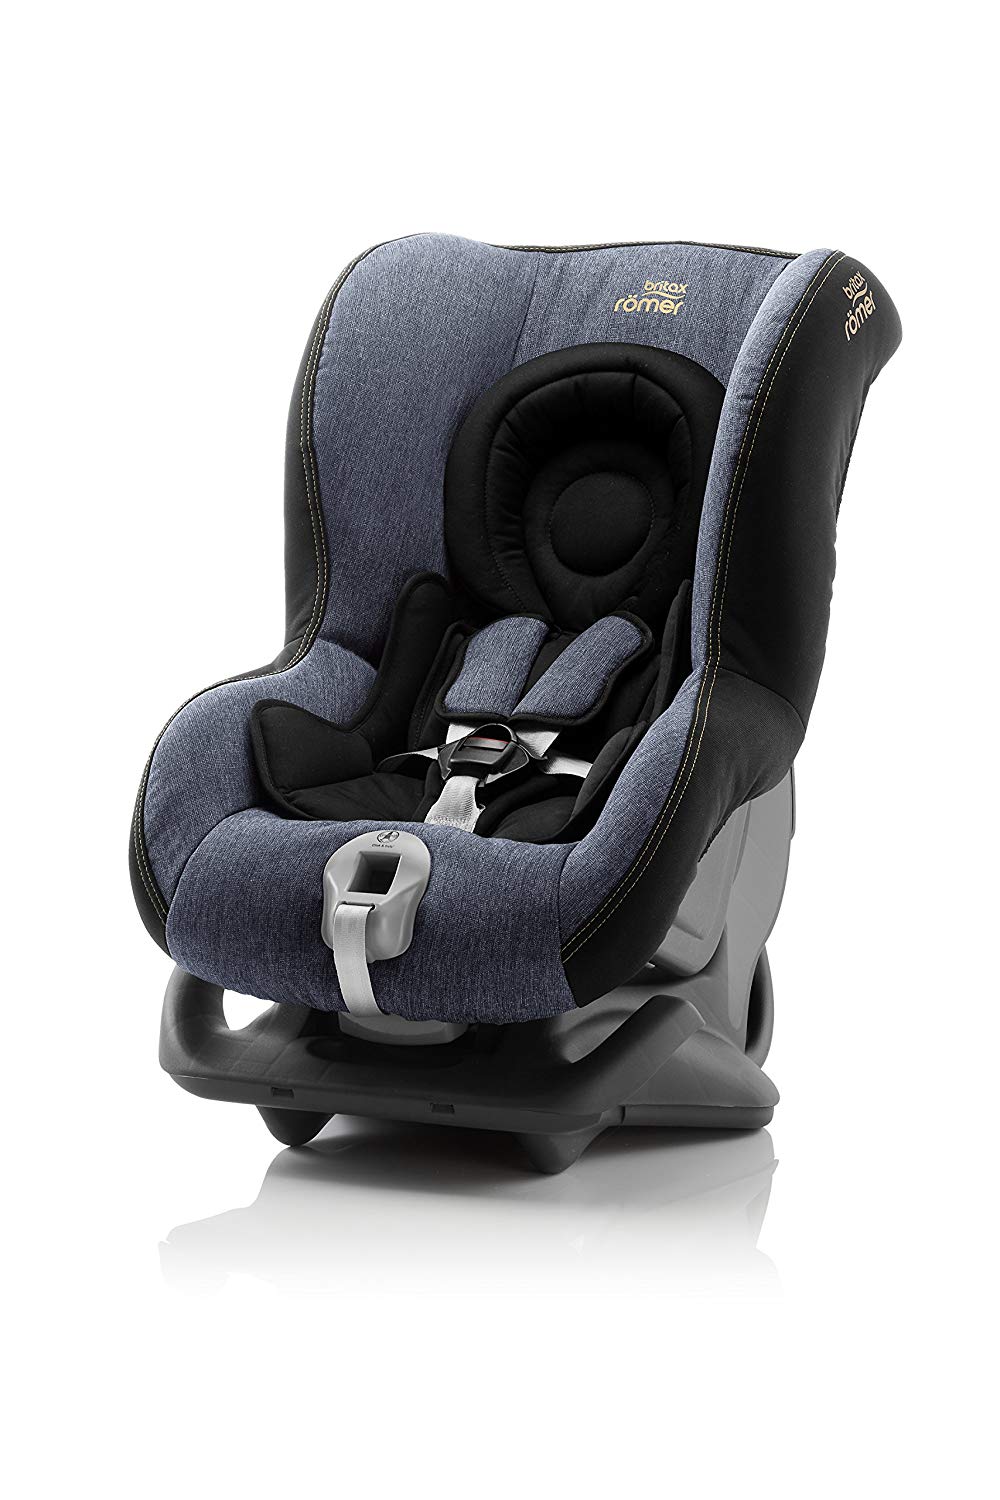 Britax Römer First Class Plus Child Car Seat Group 0+/1 18 kg Blue marble